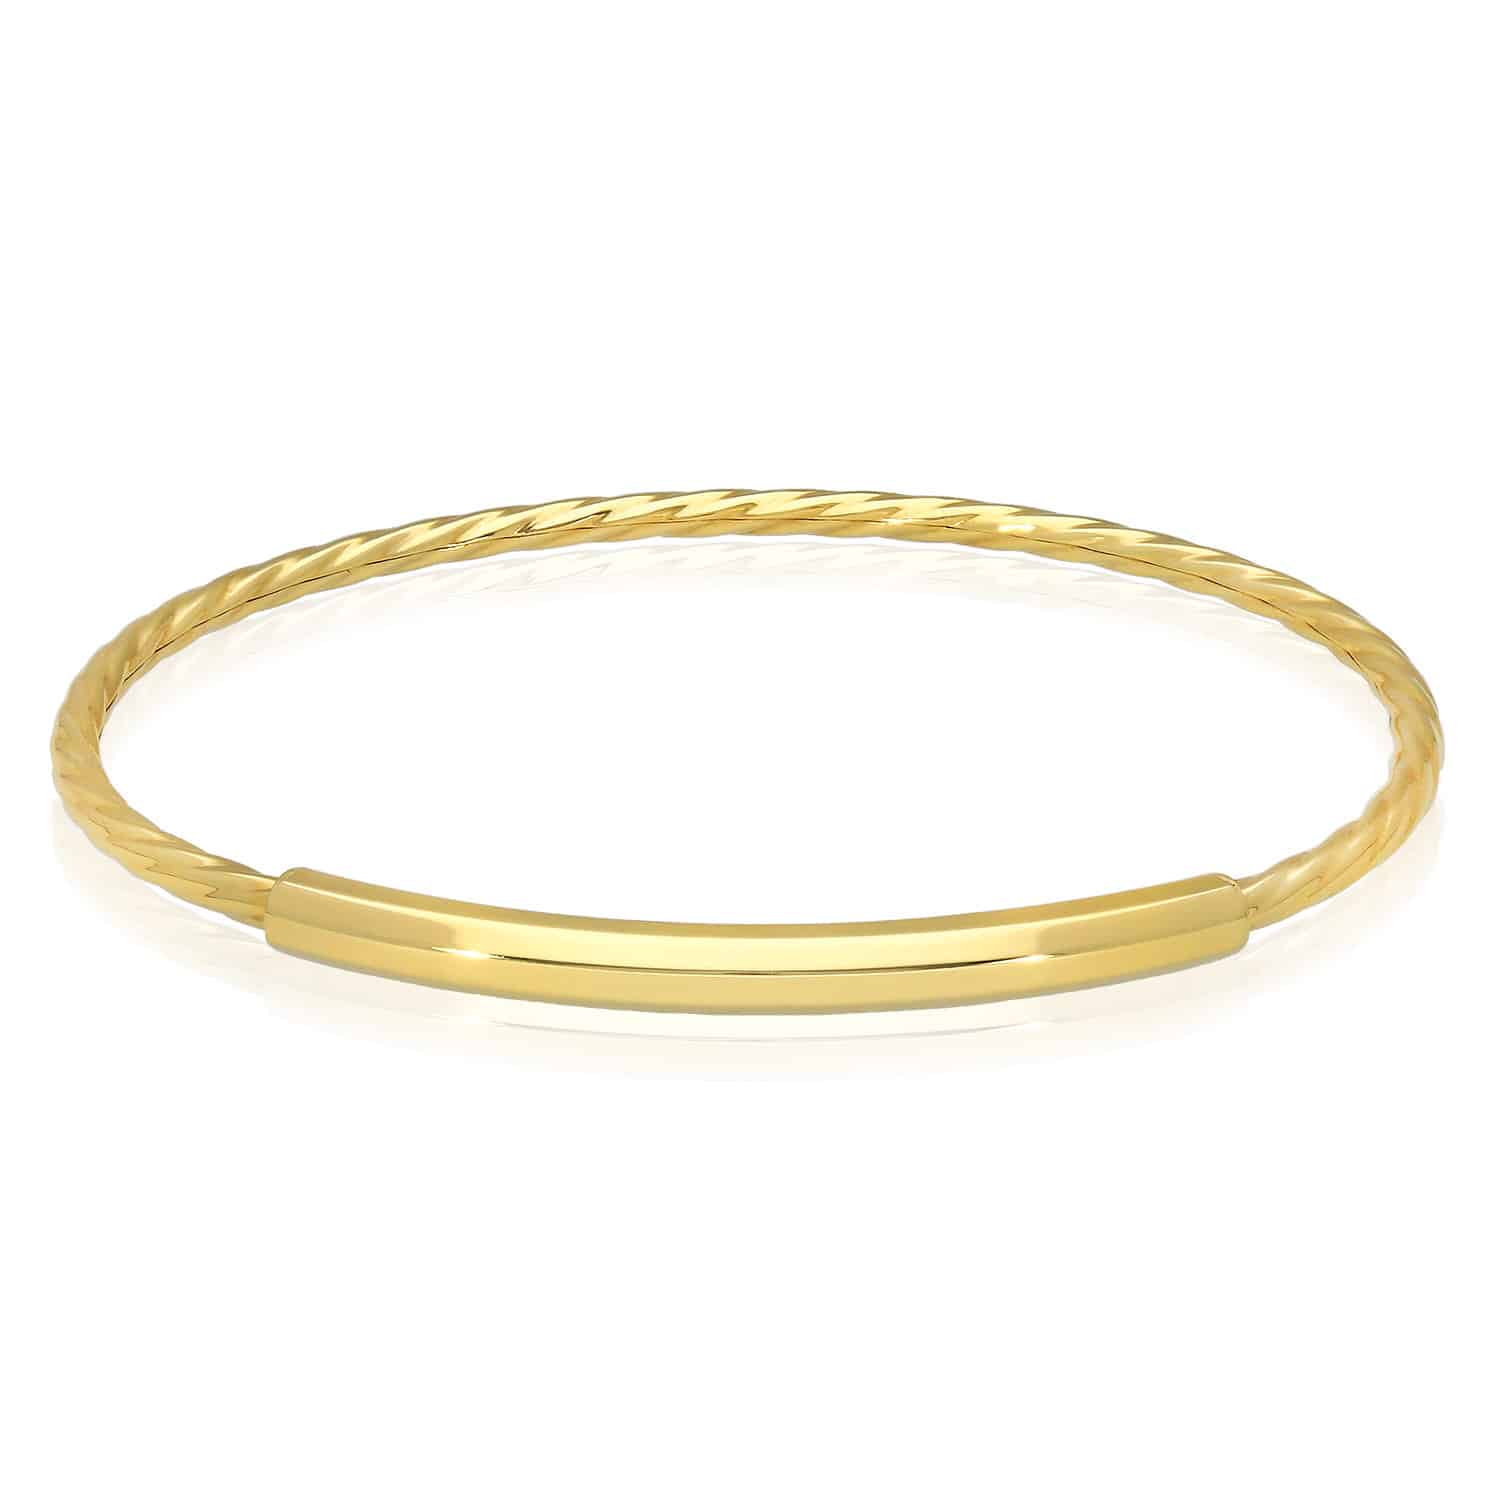 10K Gold 2.6mm Twisted Tube Bar Bangle Bracelet 7.25"